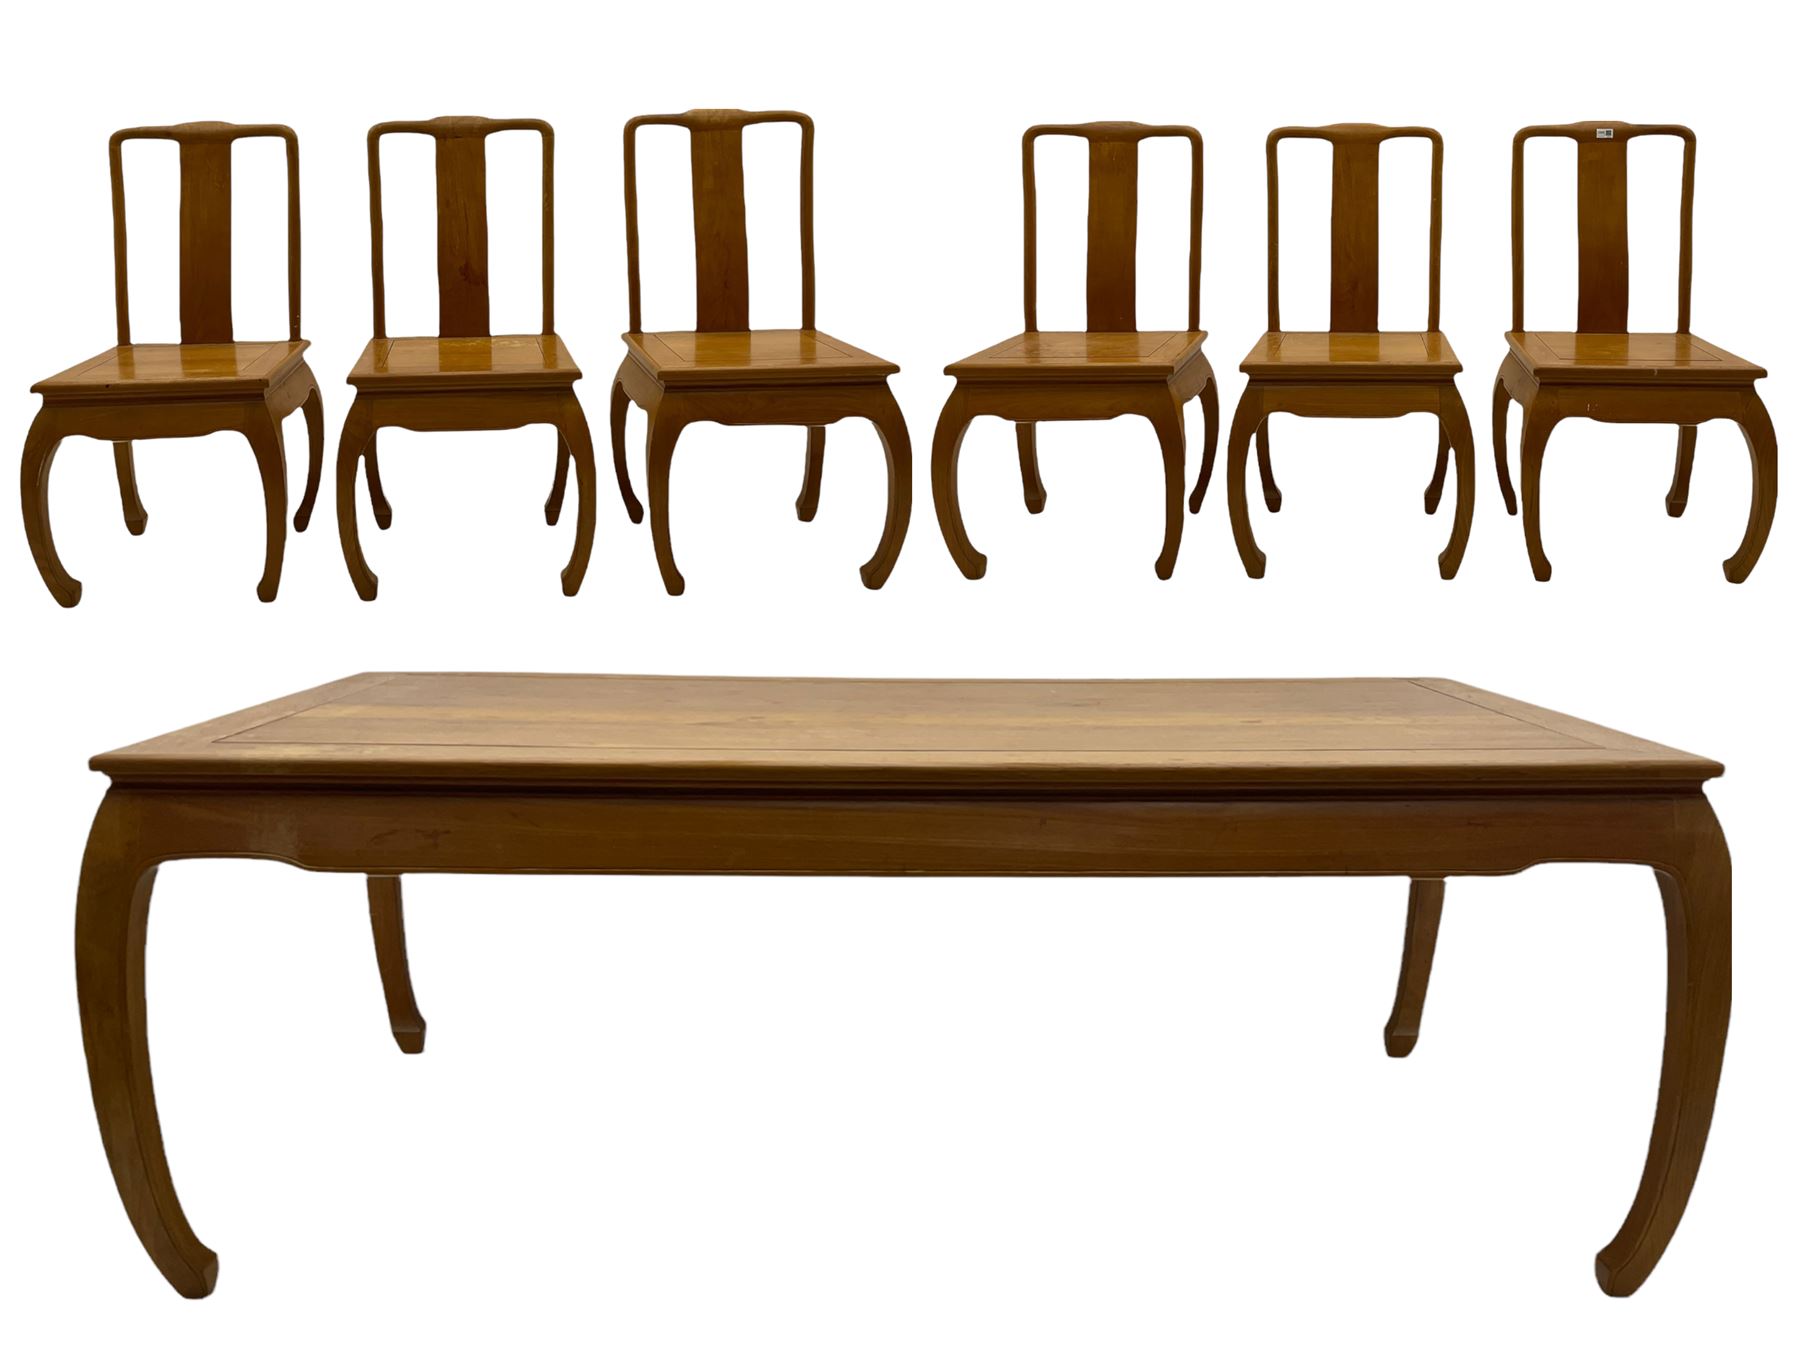 Oriental hardwood rectangular dining table